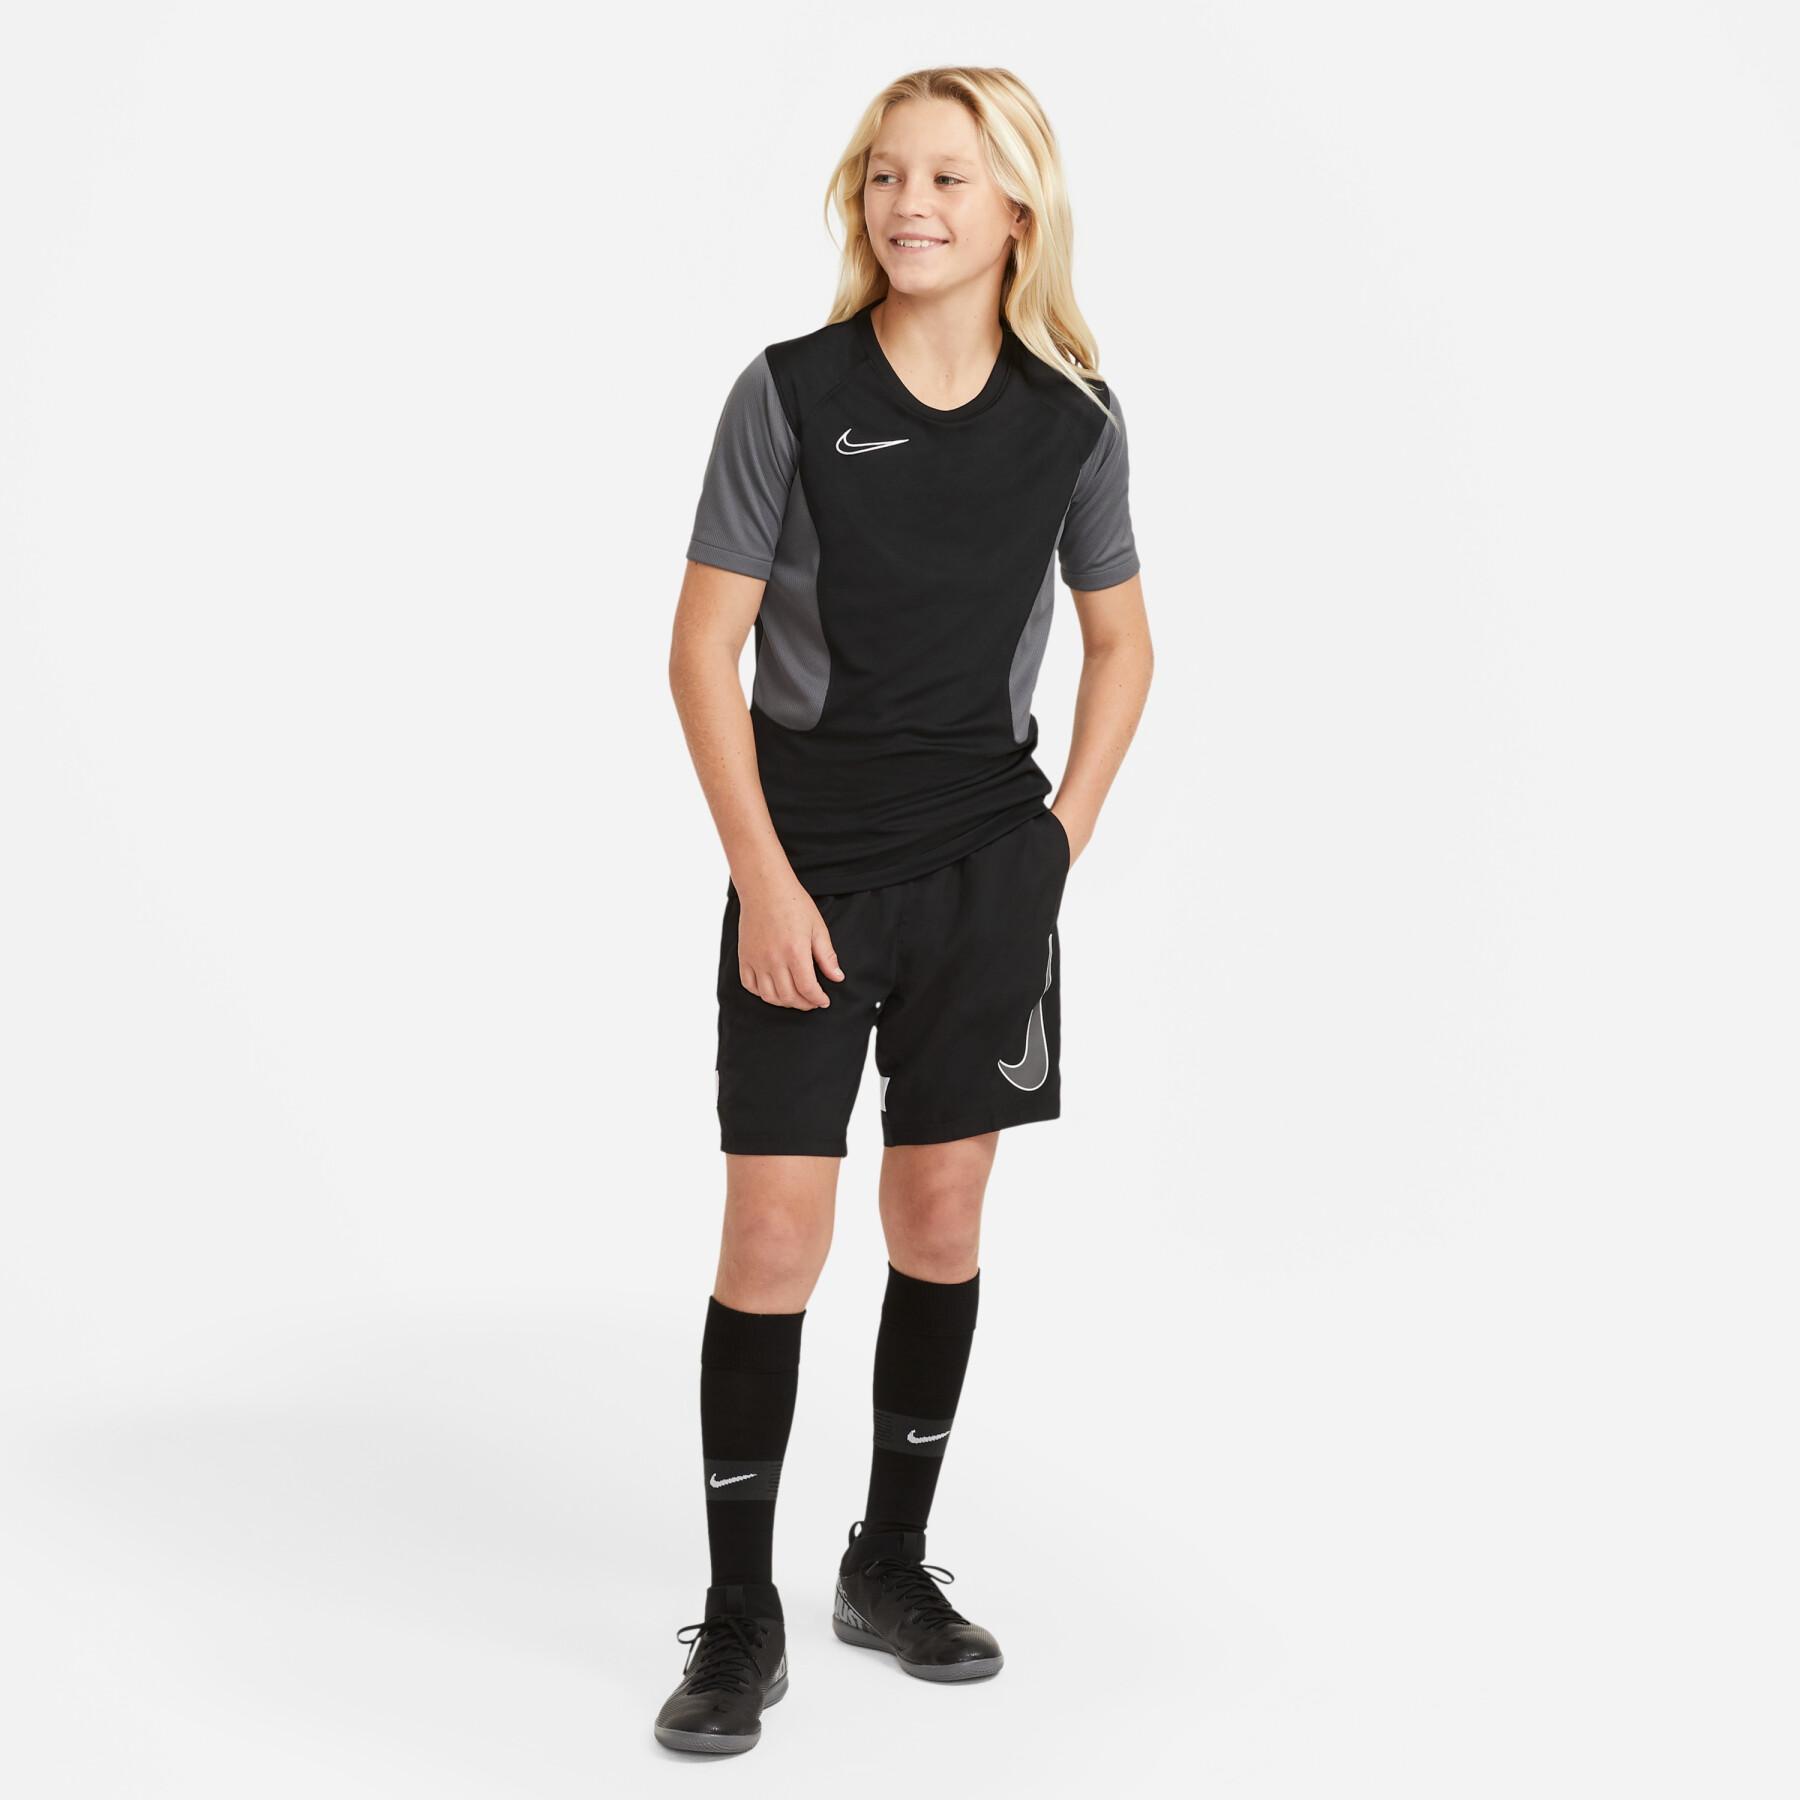 Kinder shorts Nike Dynamic Fit GX